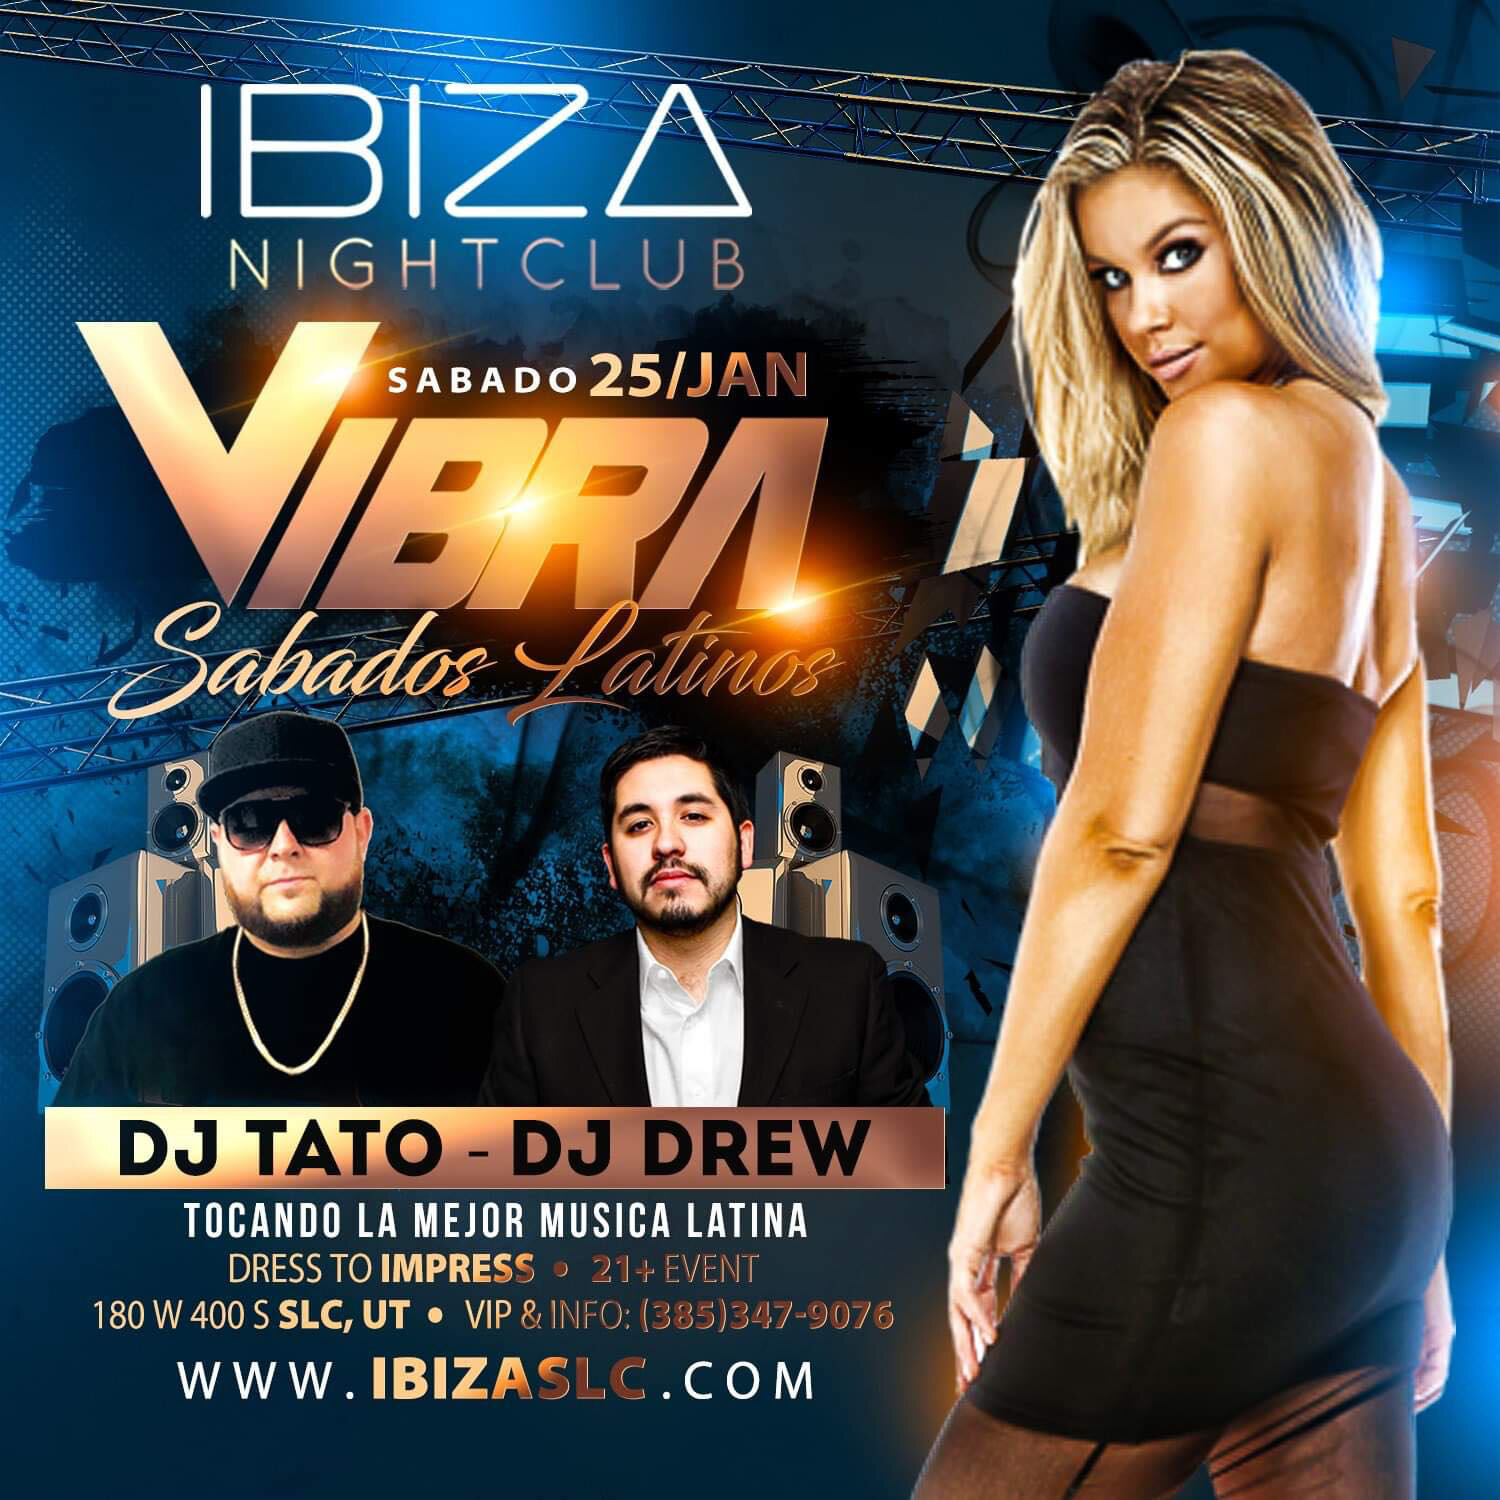 Dj Drew at Ibiza Nightclub Vibra Sabados Latinos — PREMIER EVENT DJ